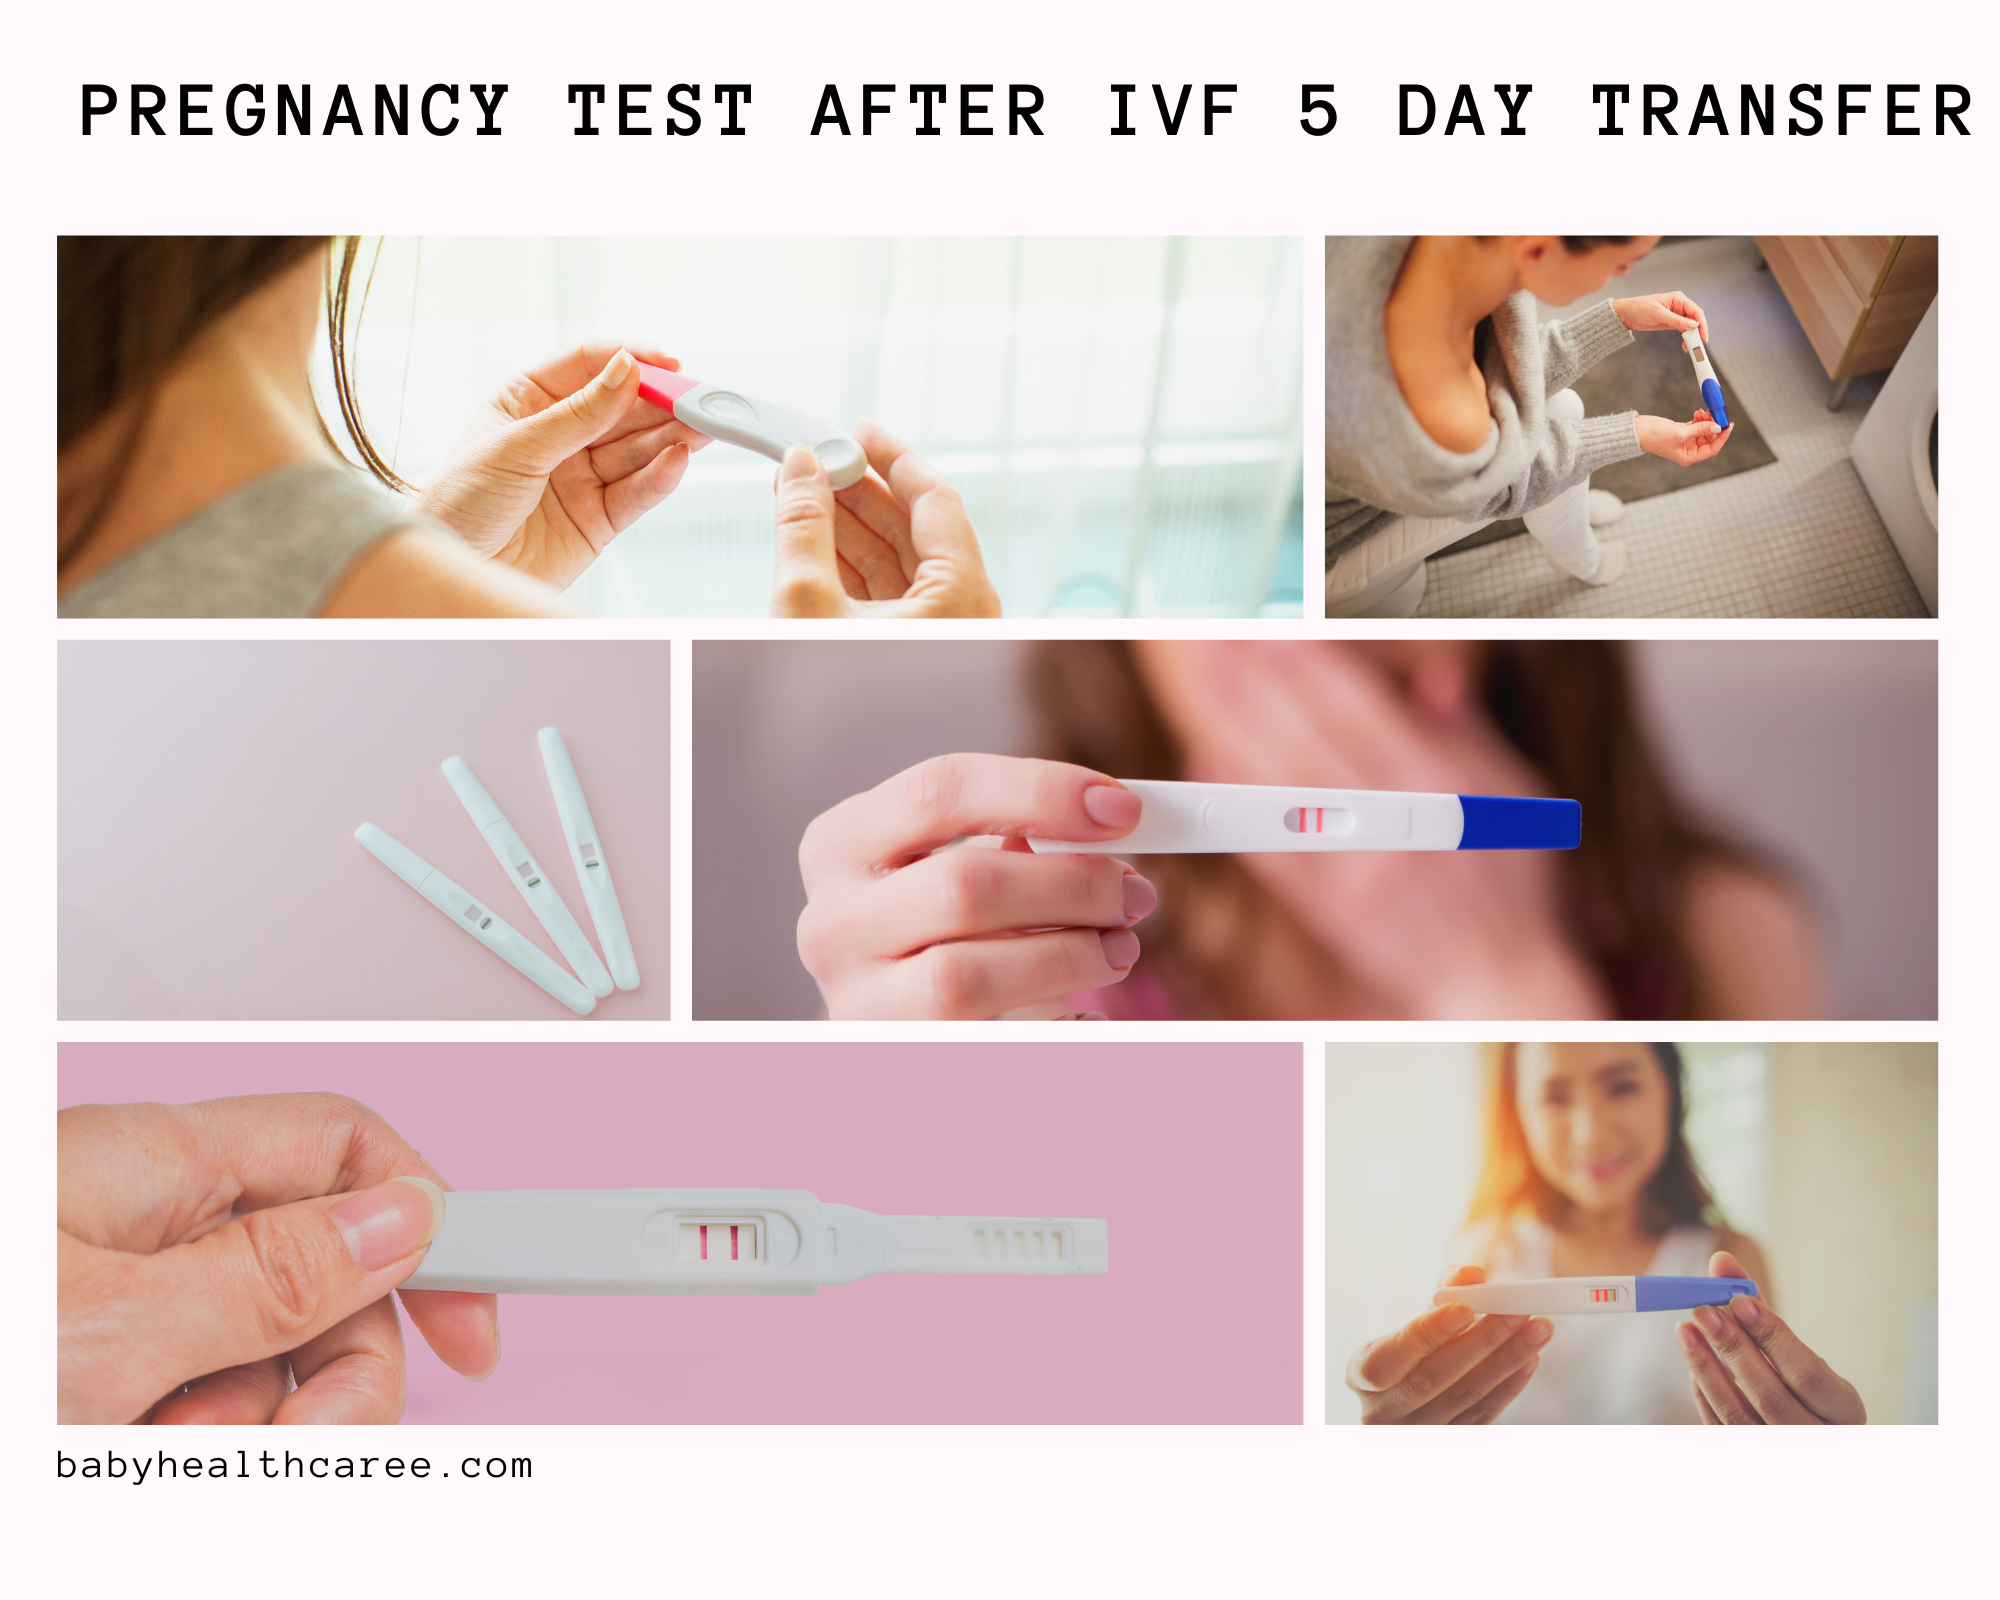 Pregnancy test after IVF 5 day transfer